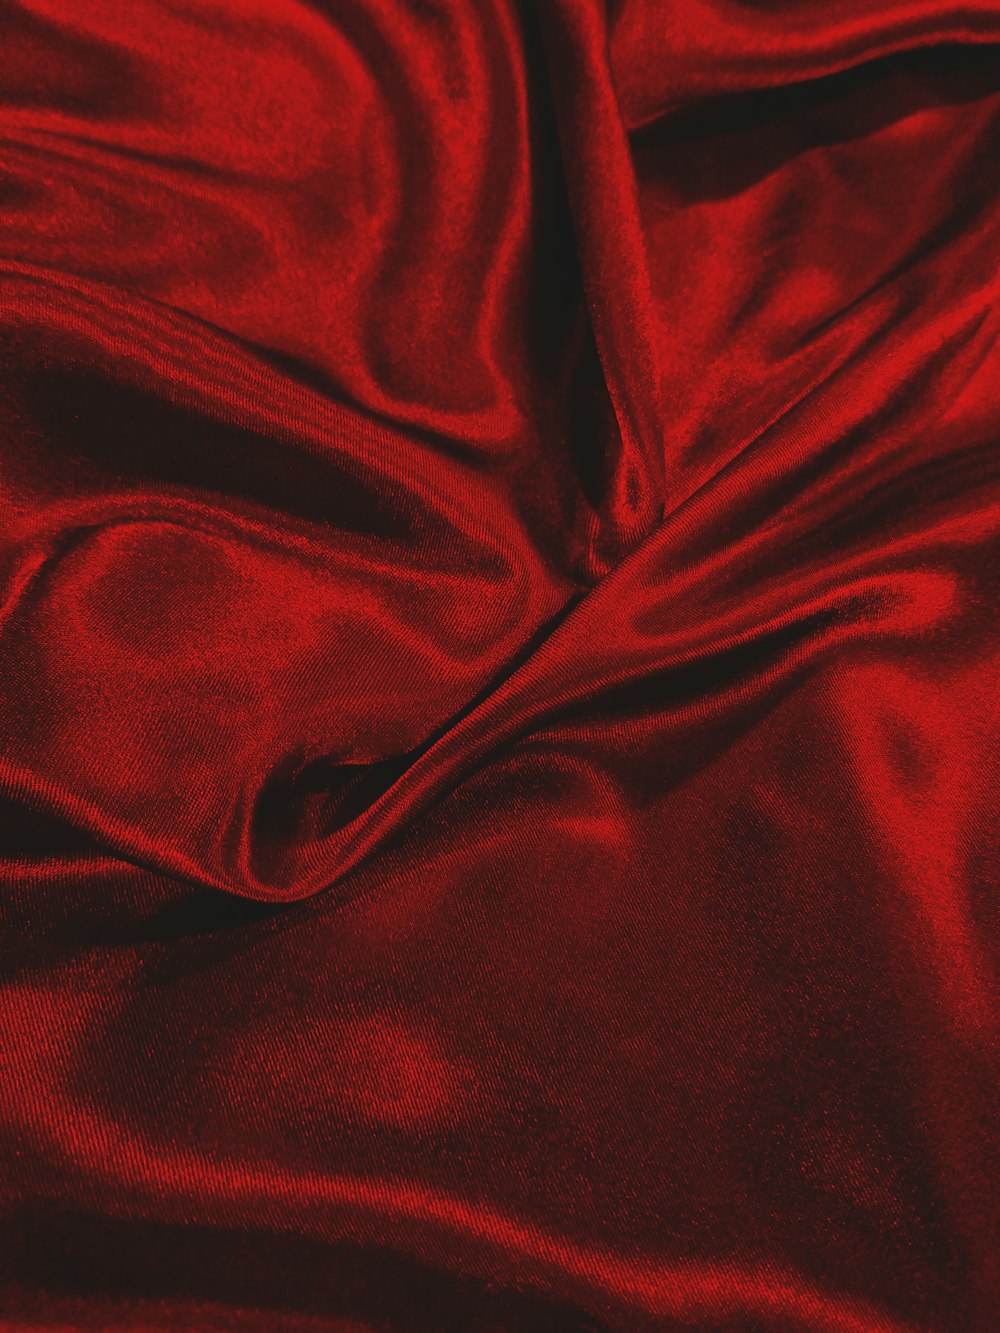 textil rojo